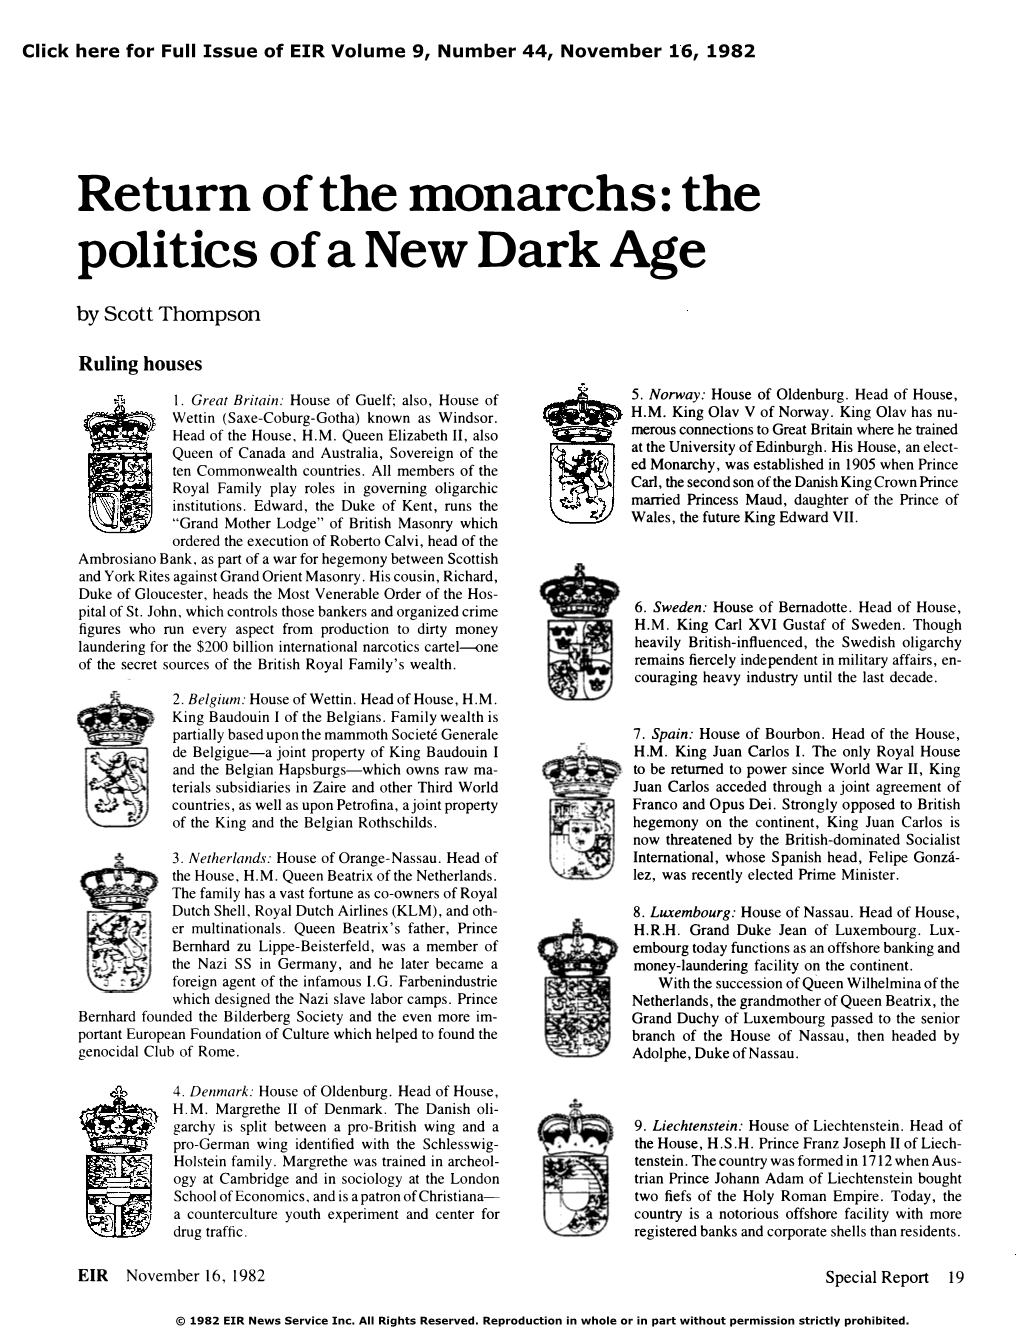 Return of the Monarchs: the Politics of a New Dark Age